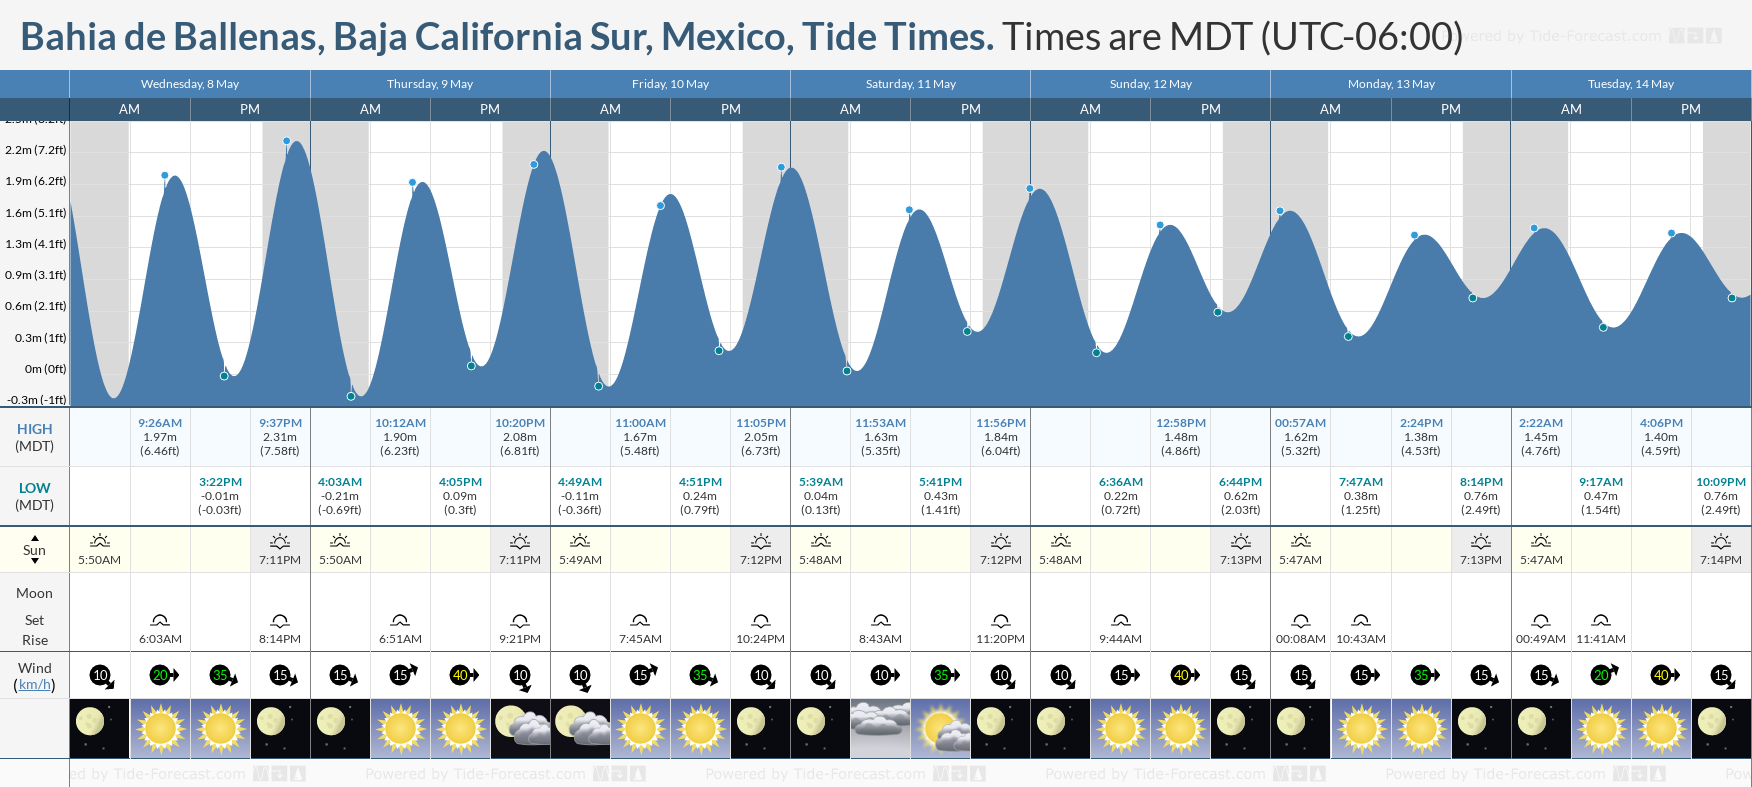 Bahia de Ballenas, Baja California Sur, Mexico Tide Chart including high and low tide times for the next 7 days